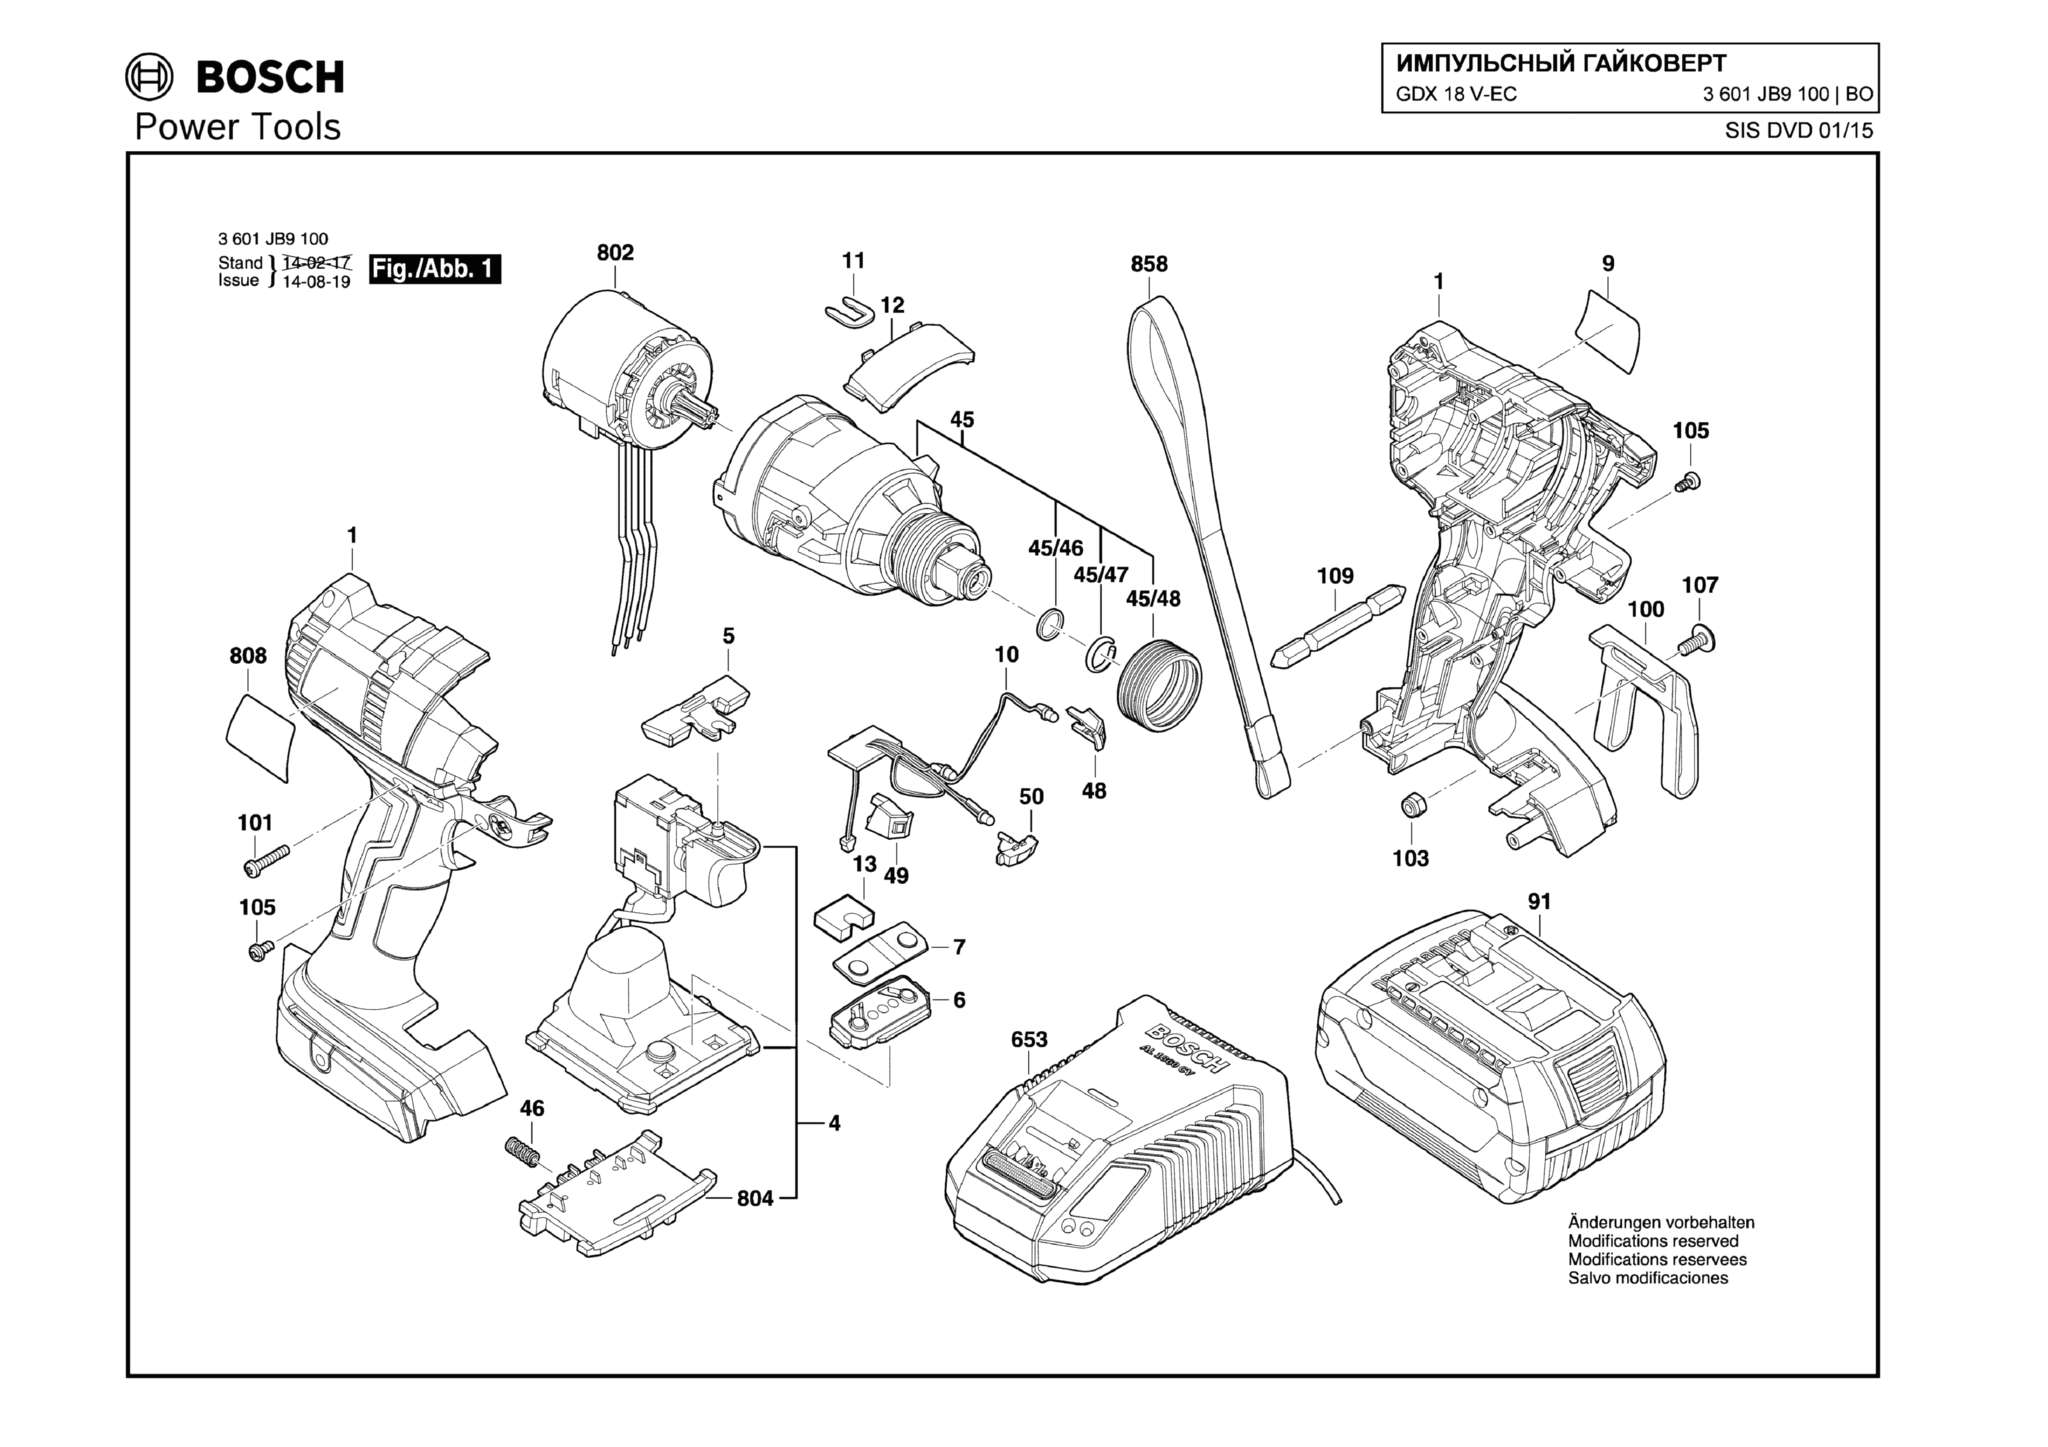 Запчасти, схема и деталировка Bosch GDX 18 V-EC (ТИП 3601JB9100)